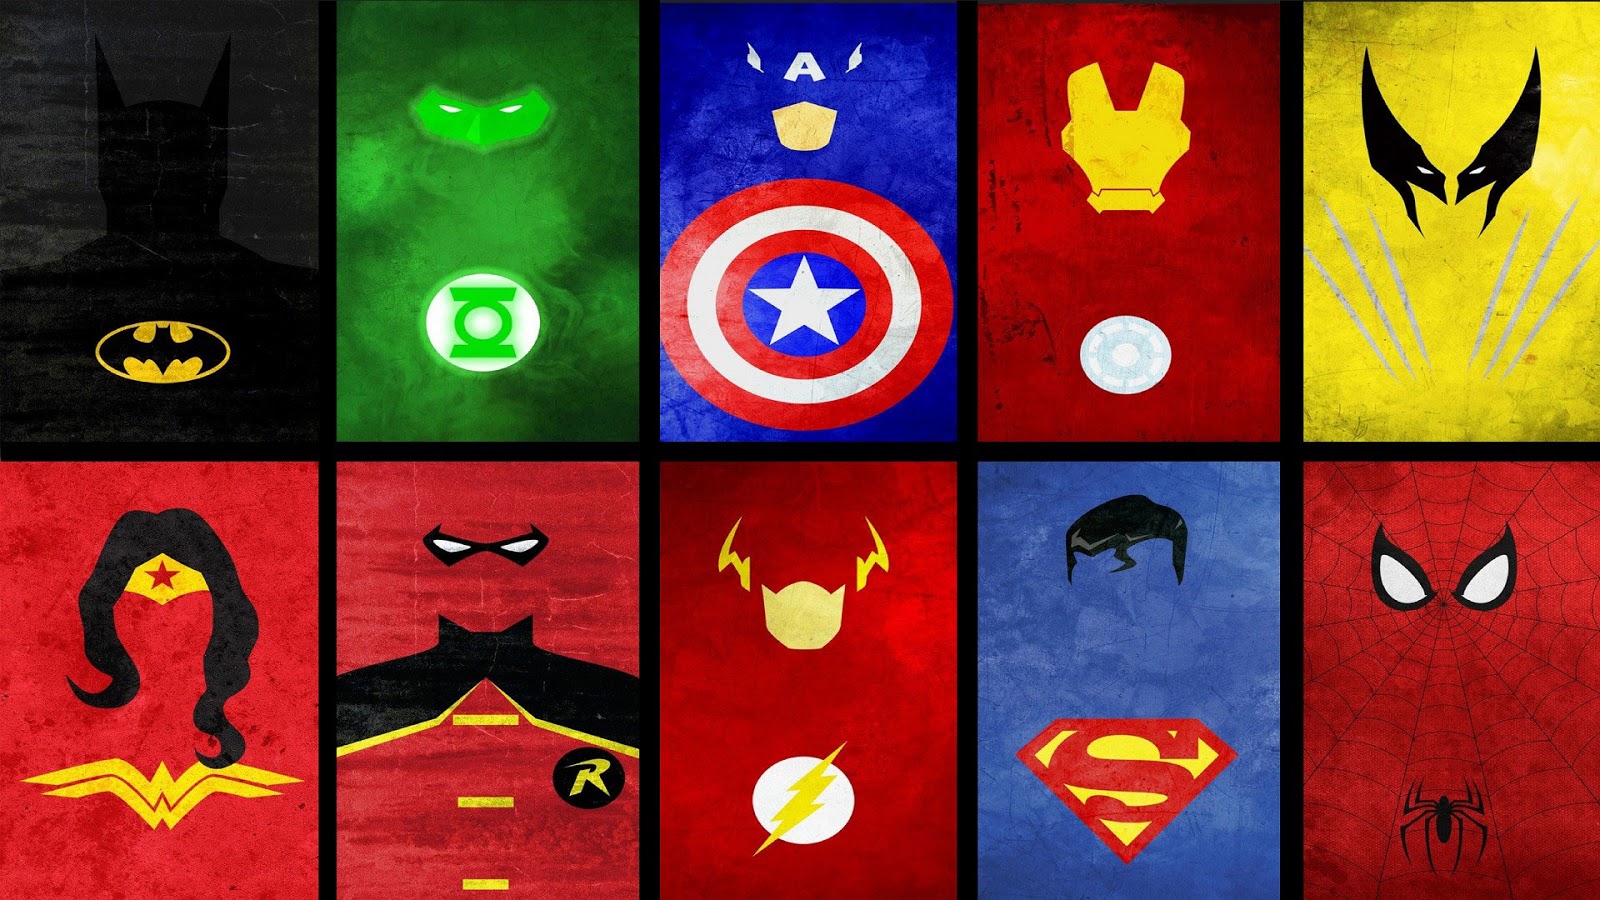 superhero logos 8 HD Wallpapers | QQKid.com